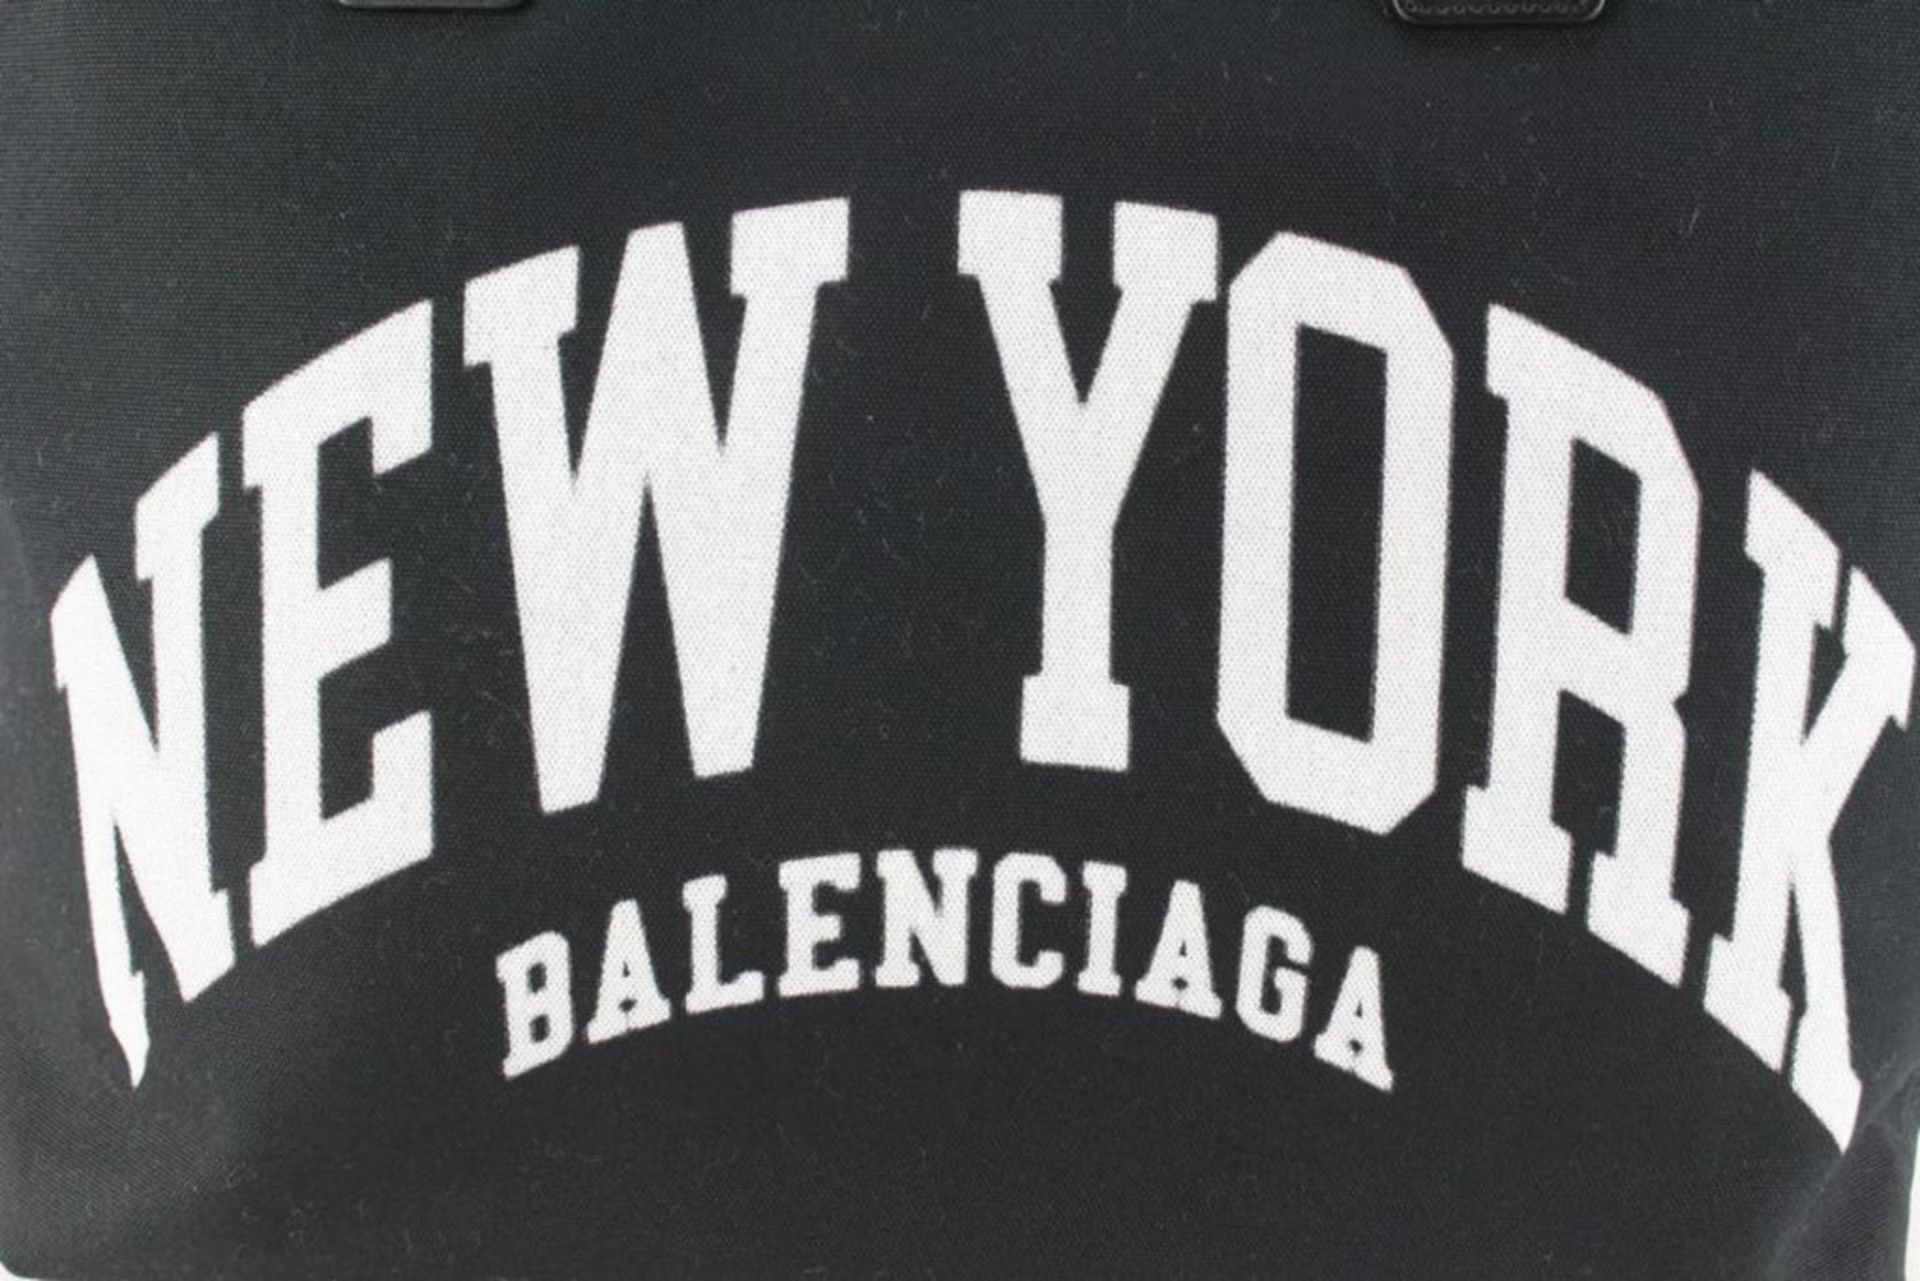 BALENCIAGA BLACK CITIES NEW YORK JUMBO LARGE TOTE BAG - Image 3 of 11